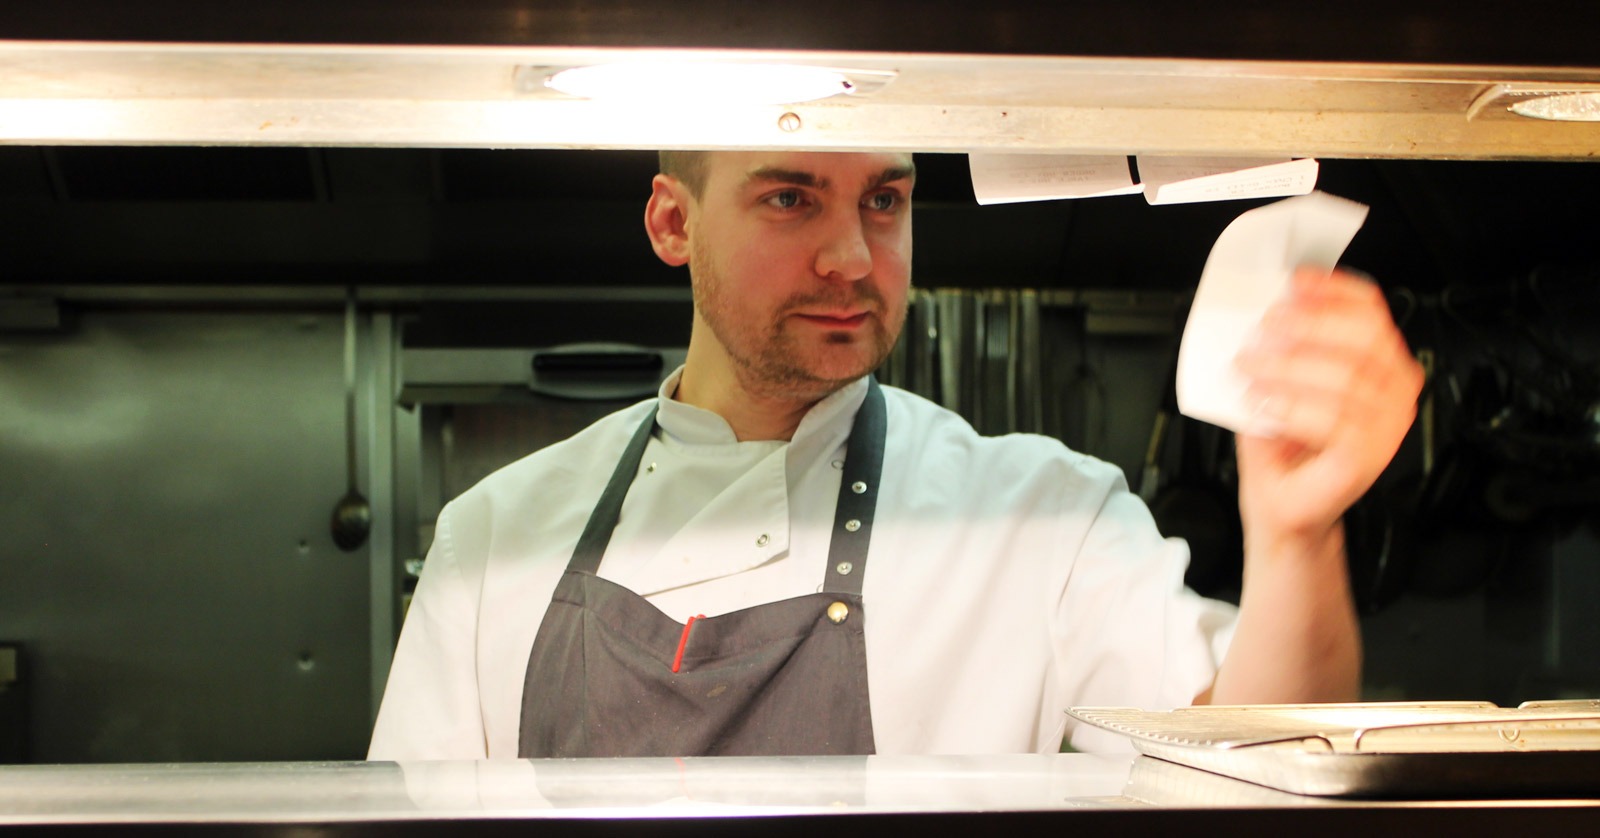 Lockwood’s restaurant of Ripon has appointed Richard Sharp as head chef